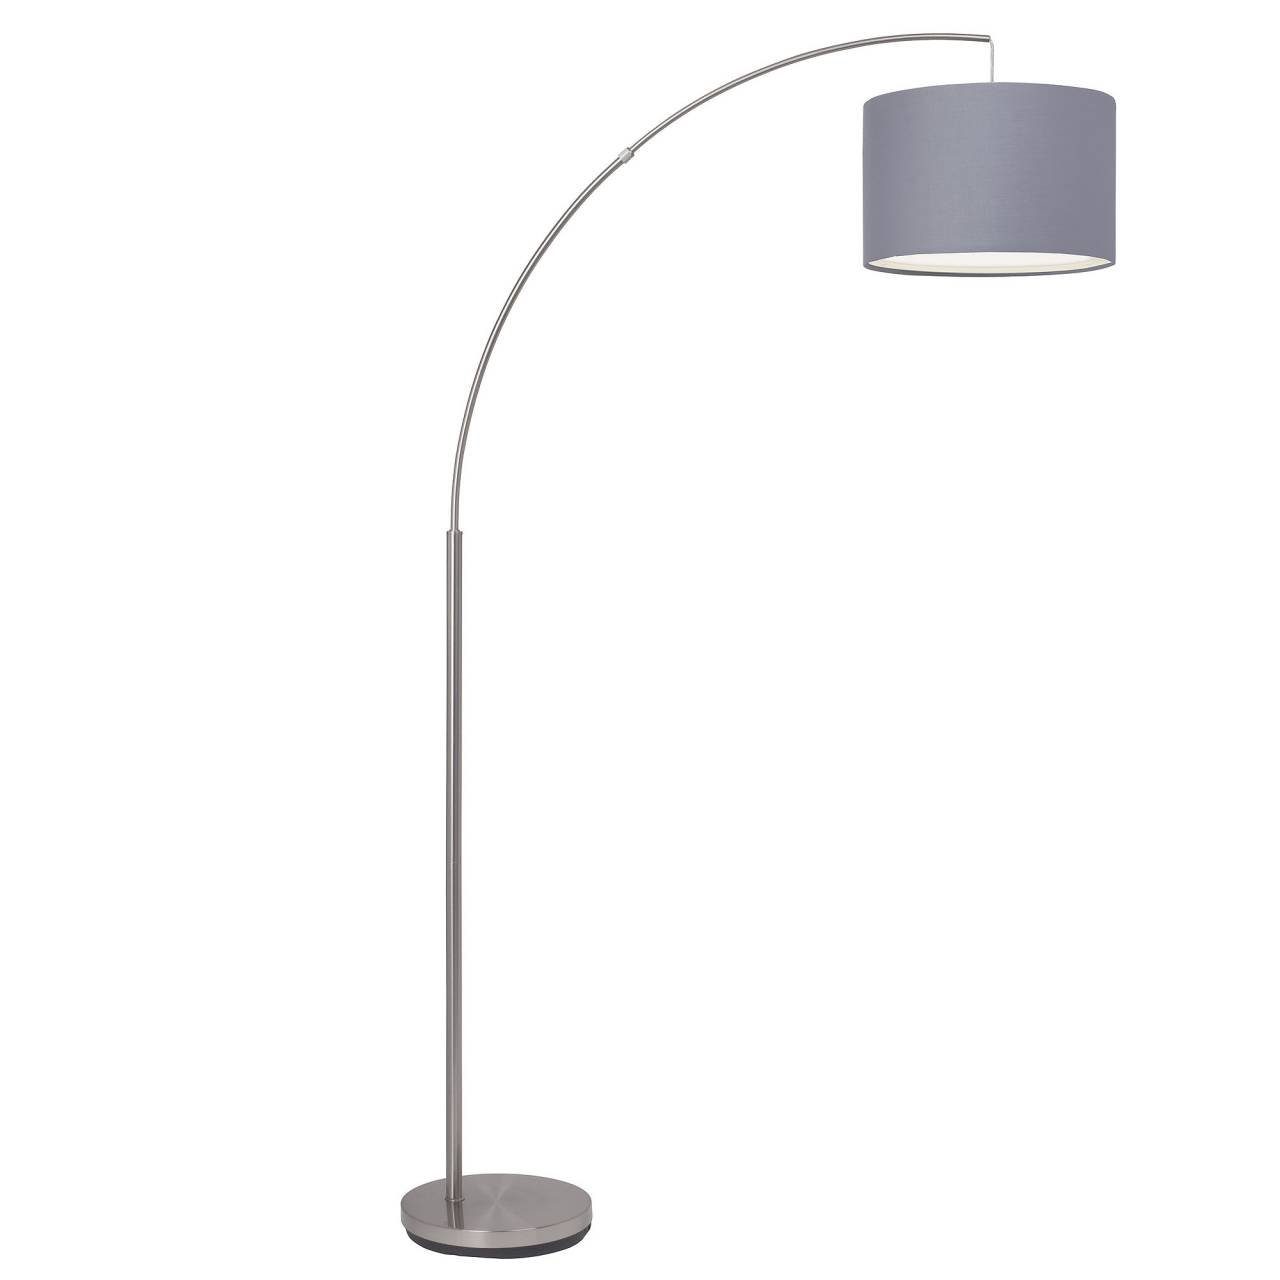 Brilliant gee Clarie, 1,8m E27, 1x A60, 60W, Lampe eisen/grau Bogenstandleuchte Stehlampe Clarie